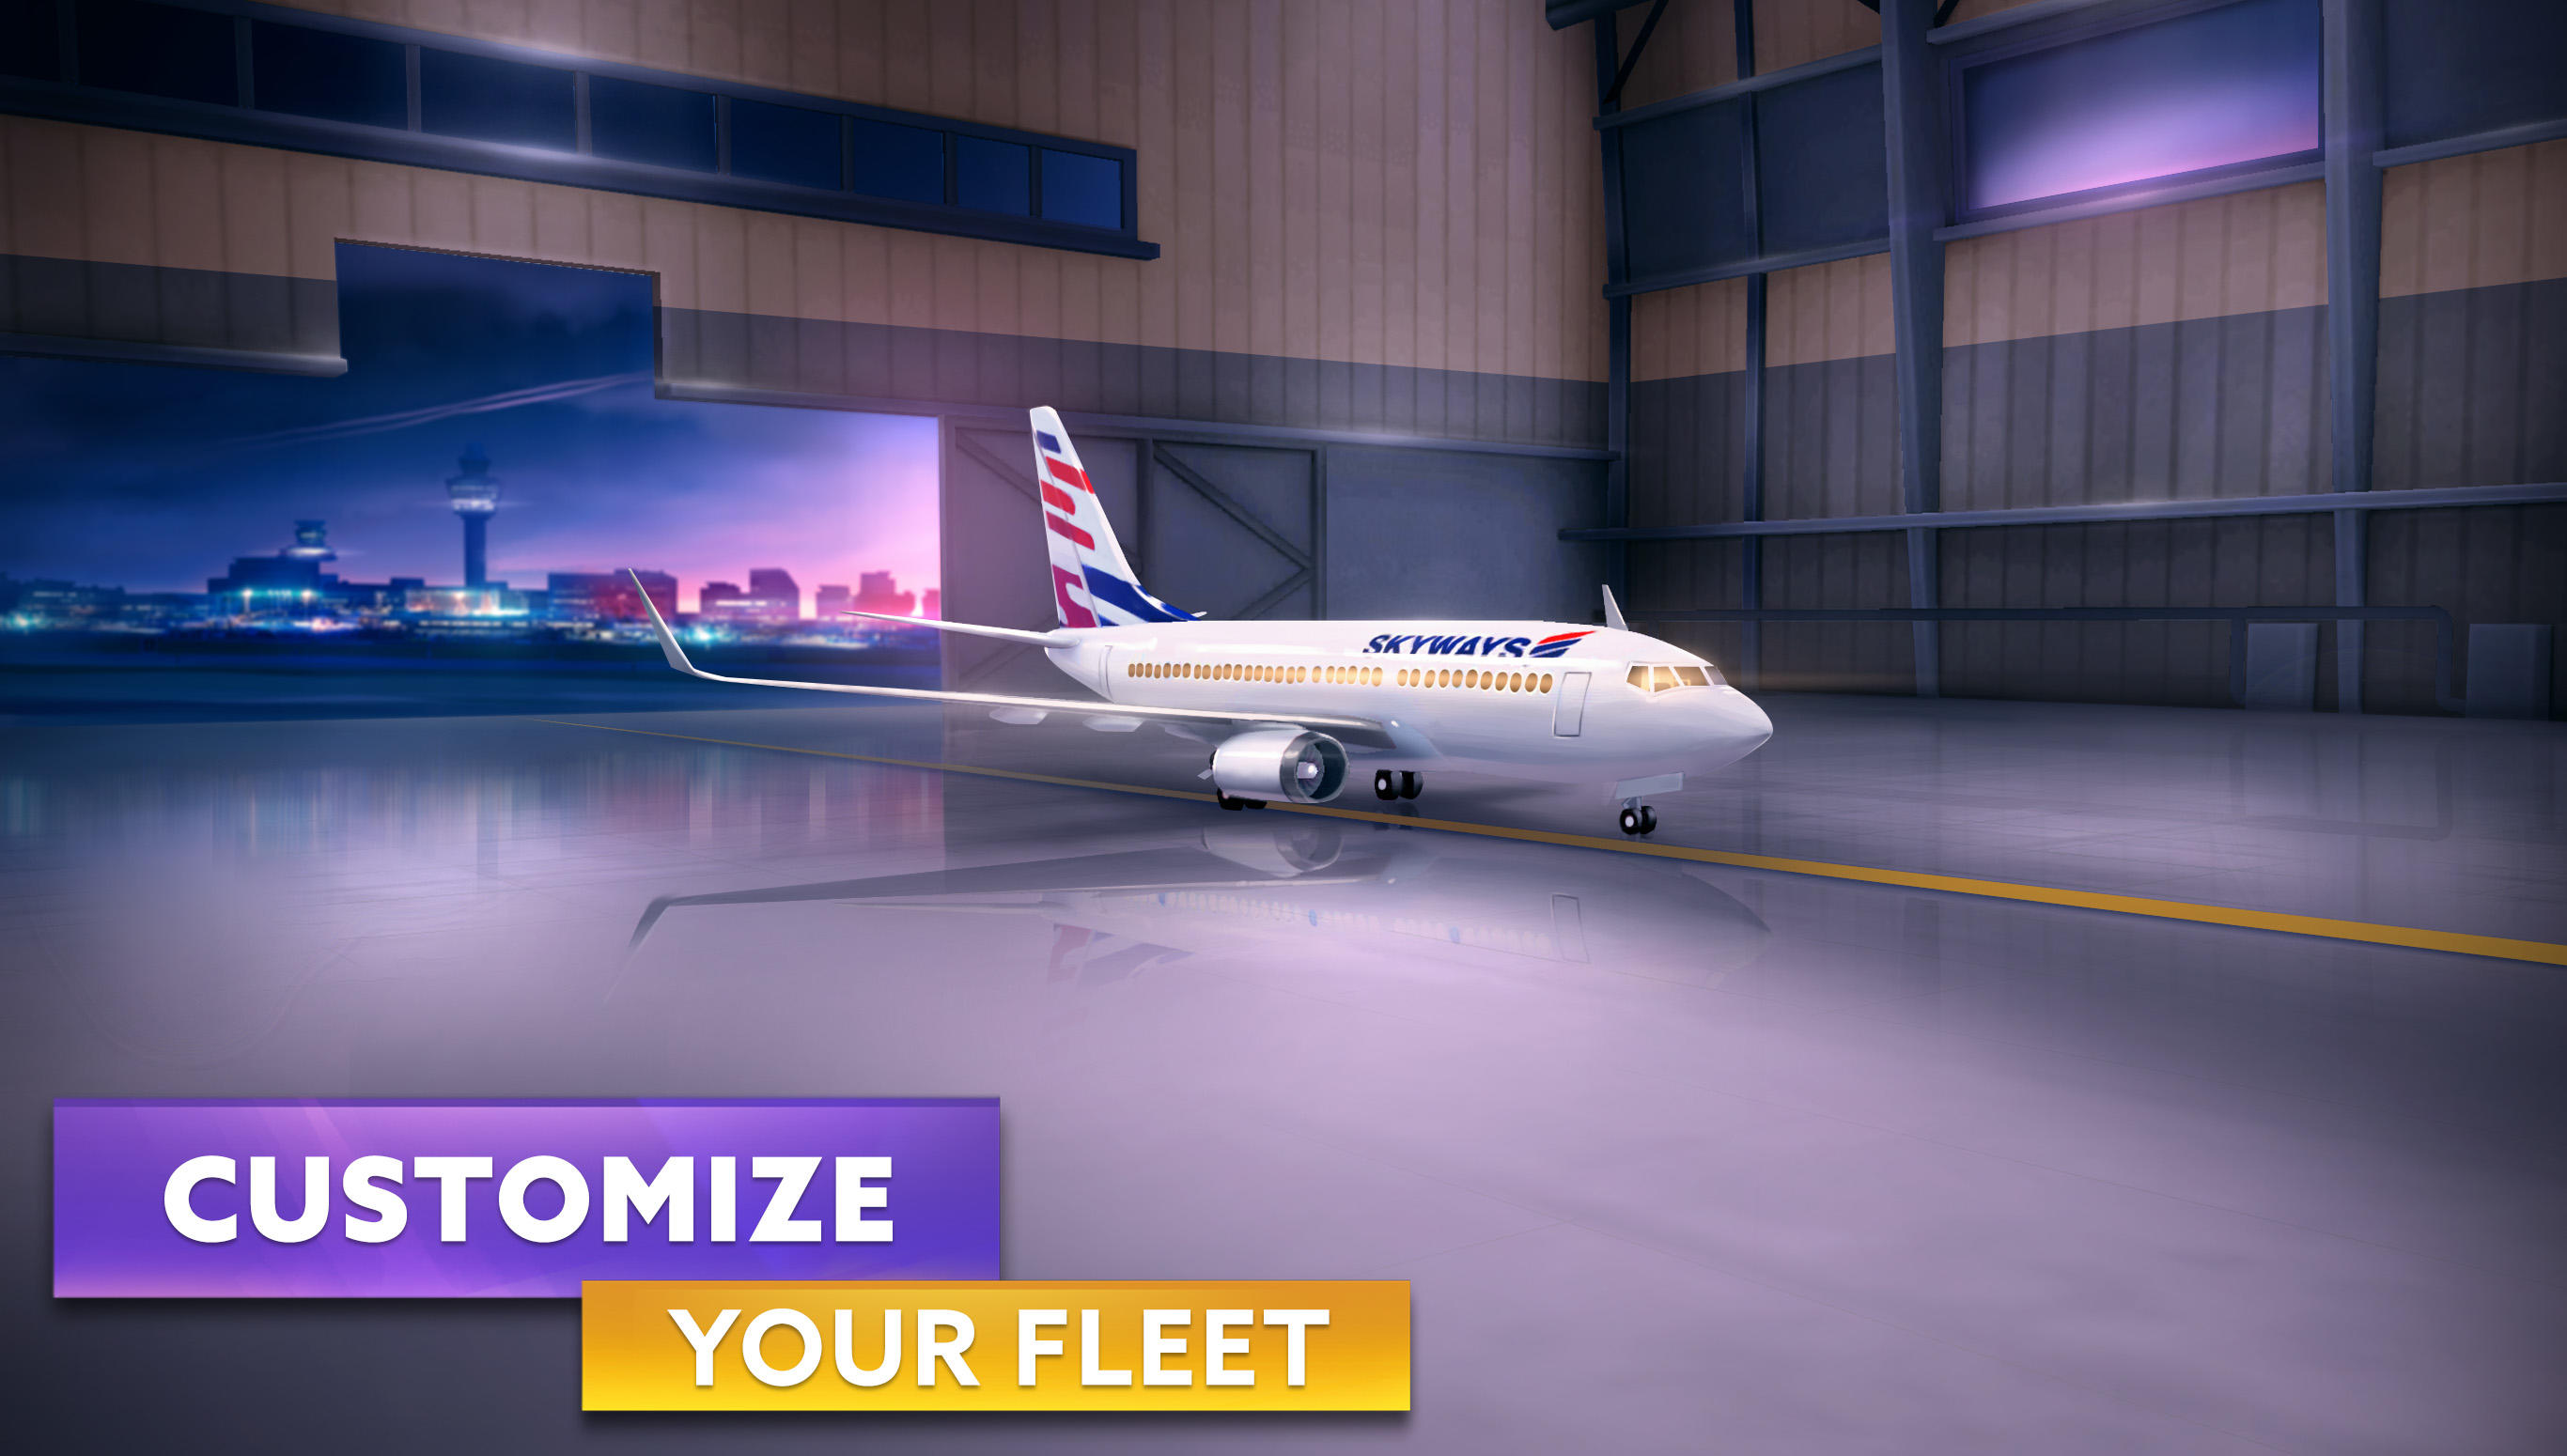 Airport Simulator: Tycoon Inc.のキャプチャ